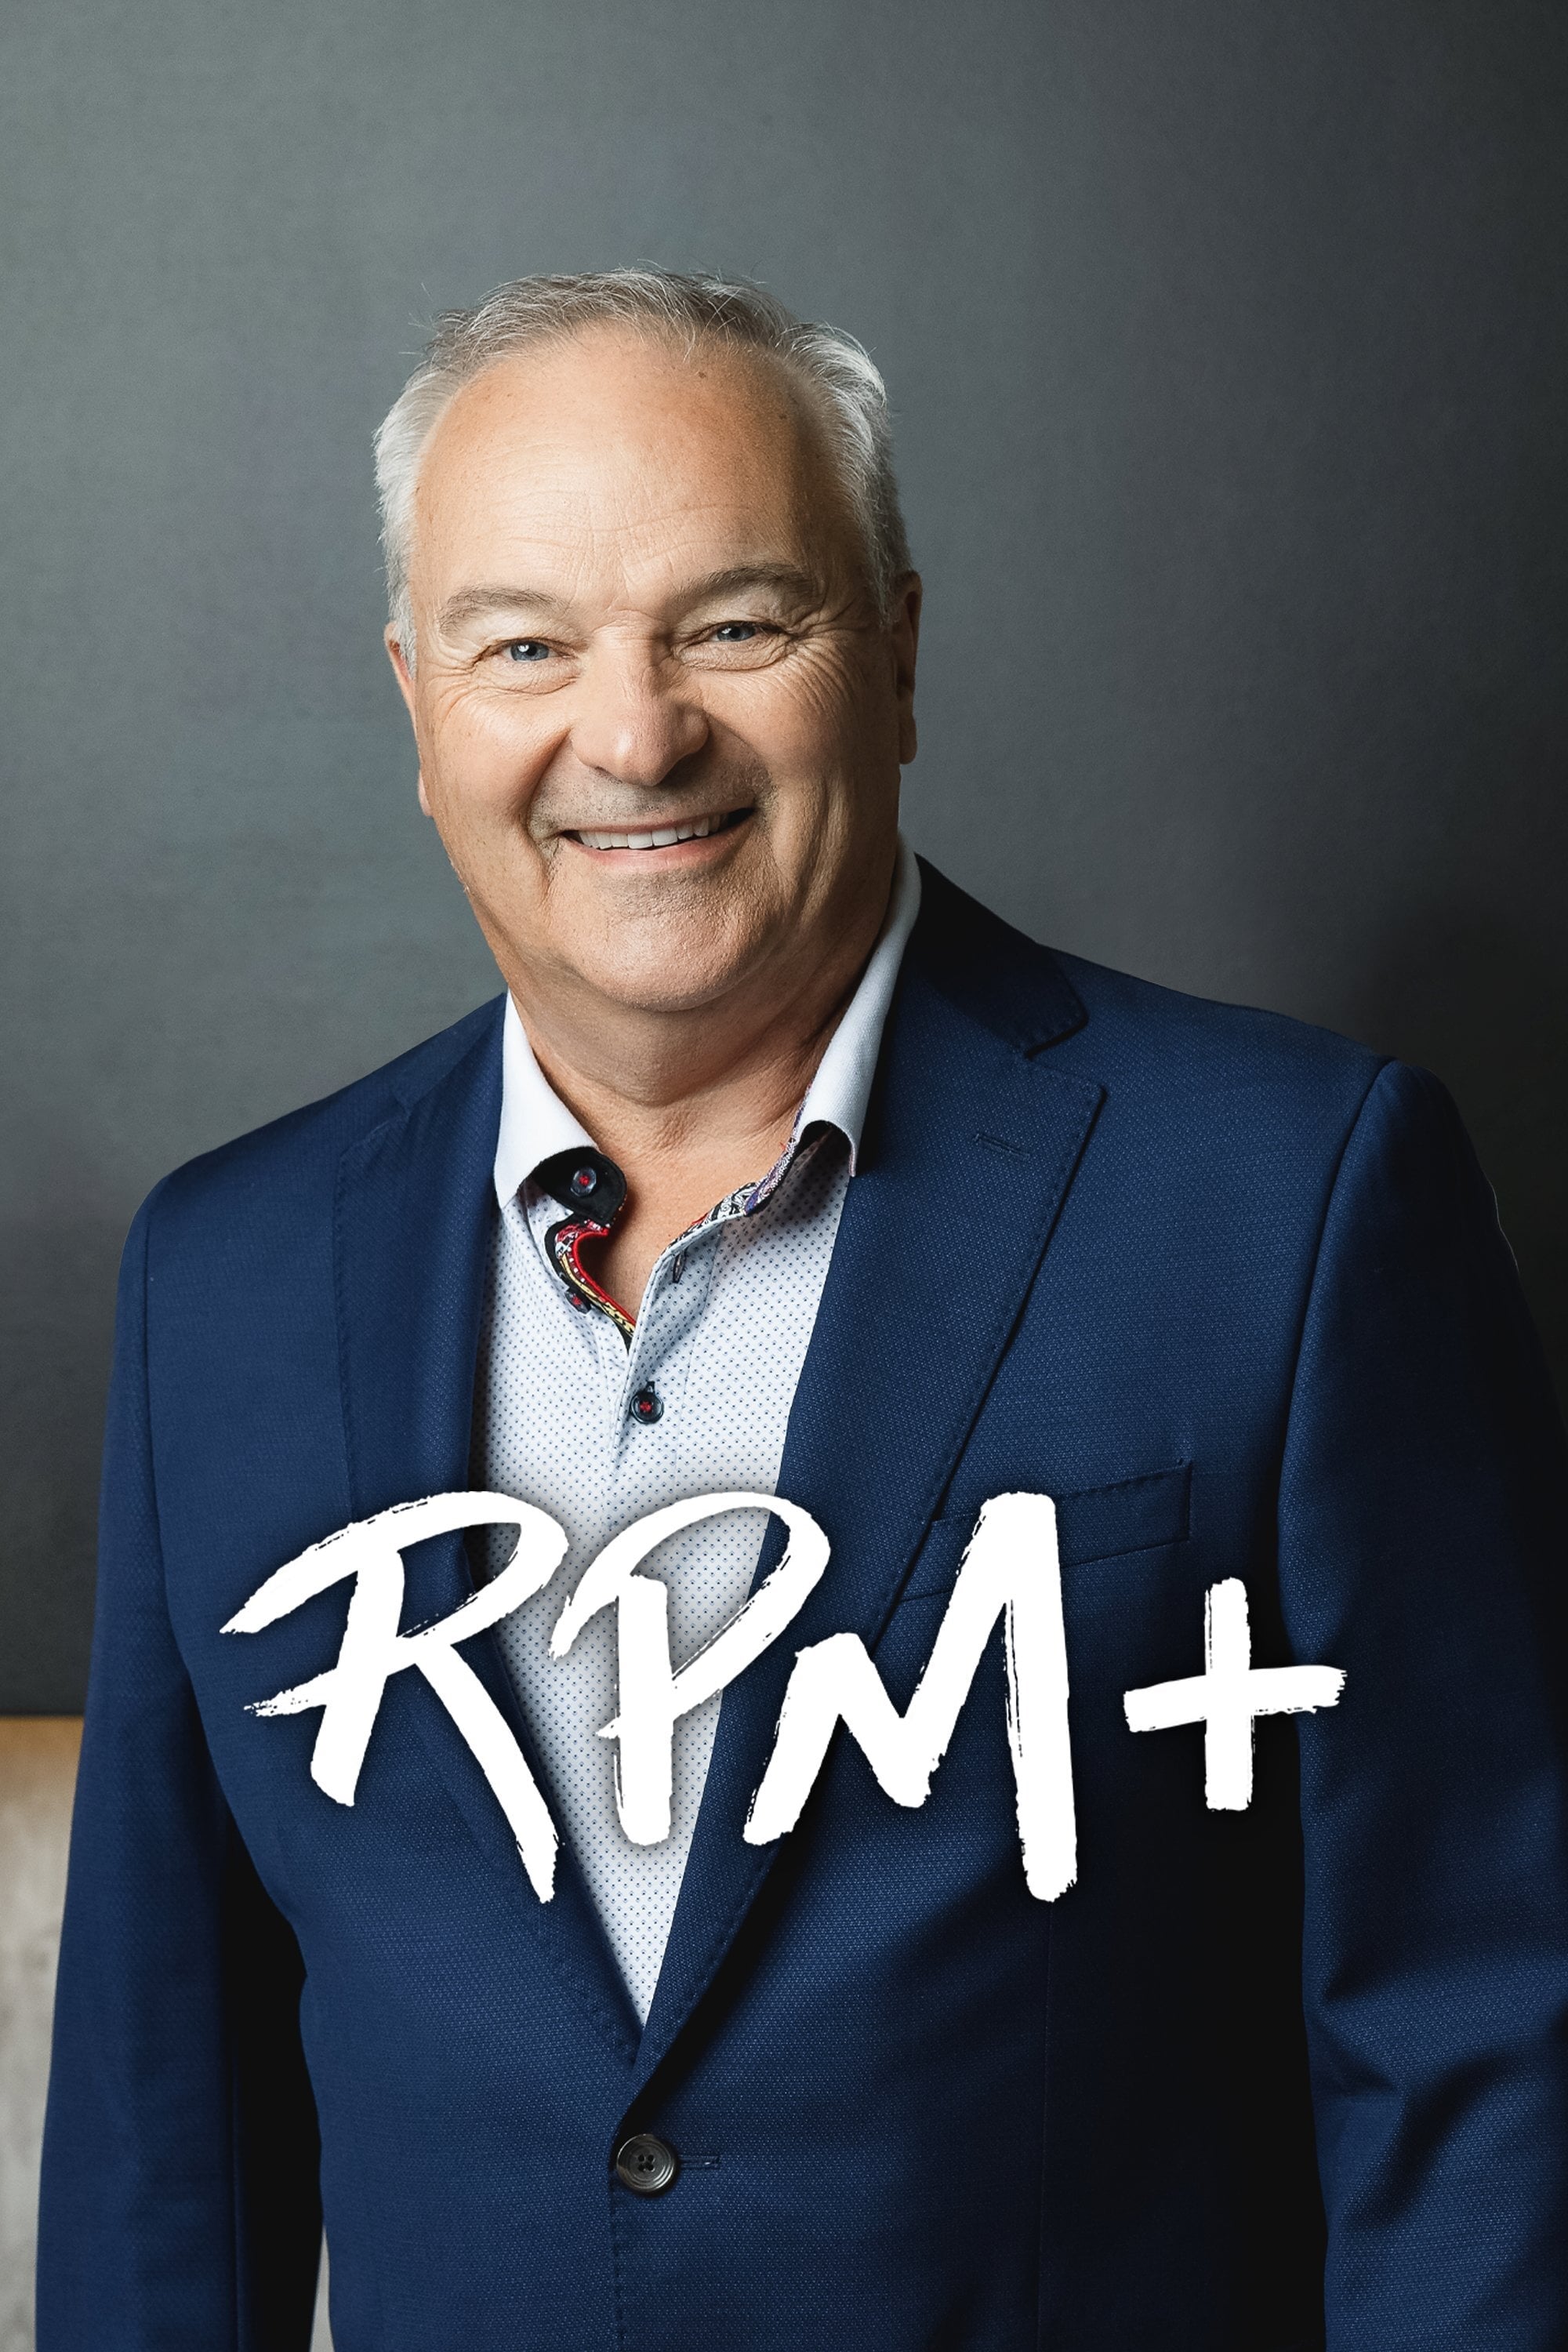 RPM+ TV Shows About Magazine Show